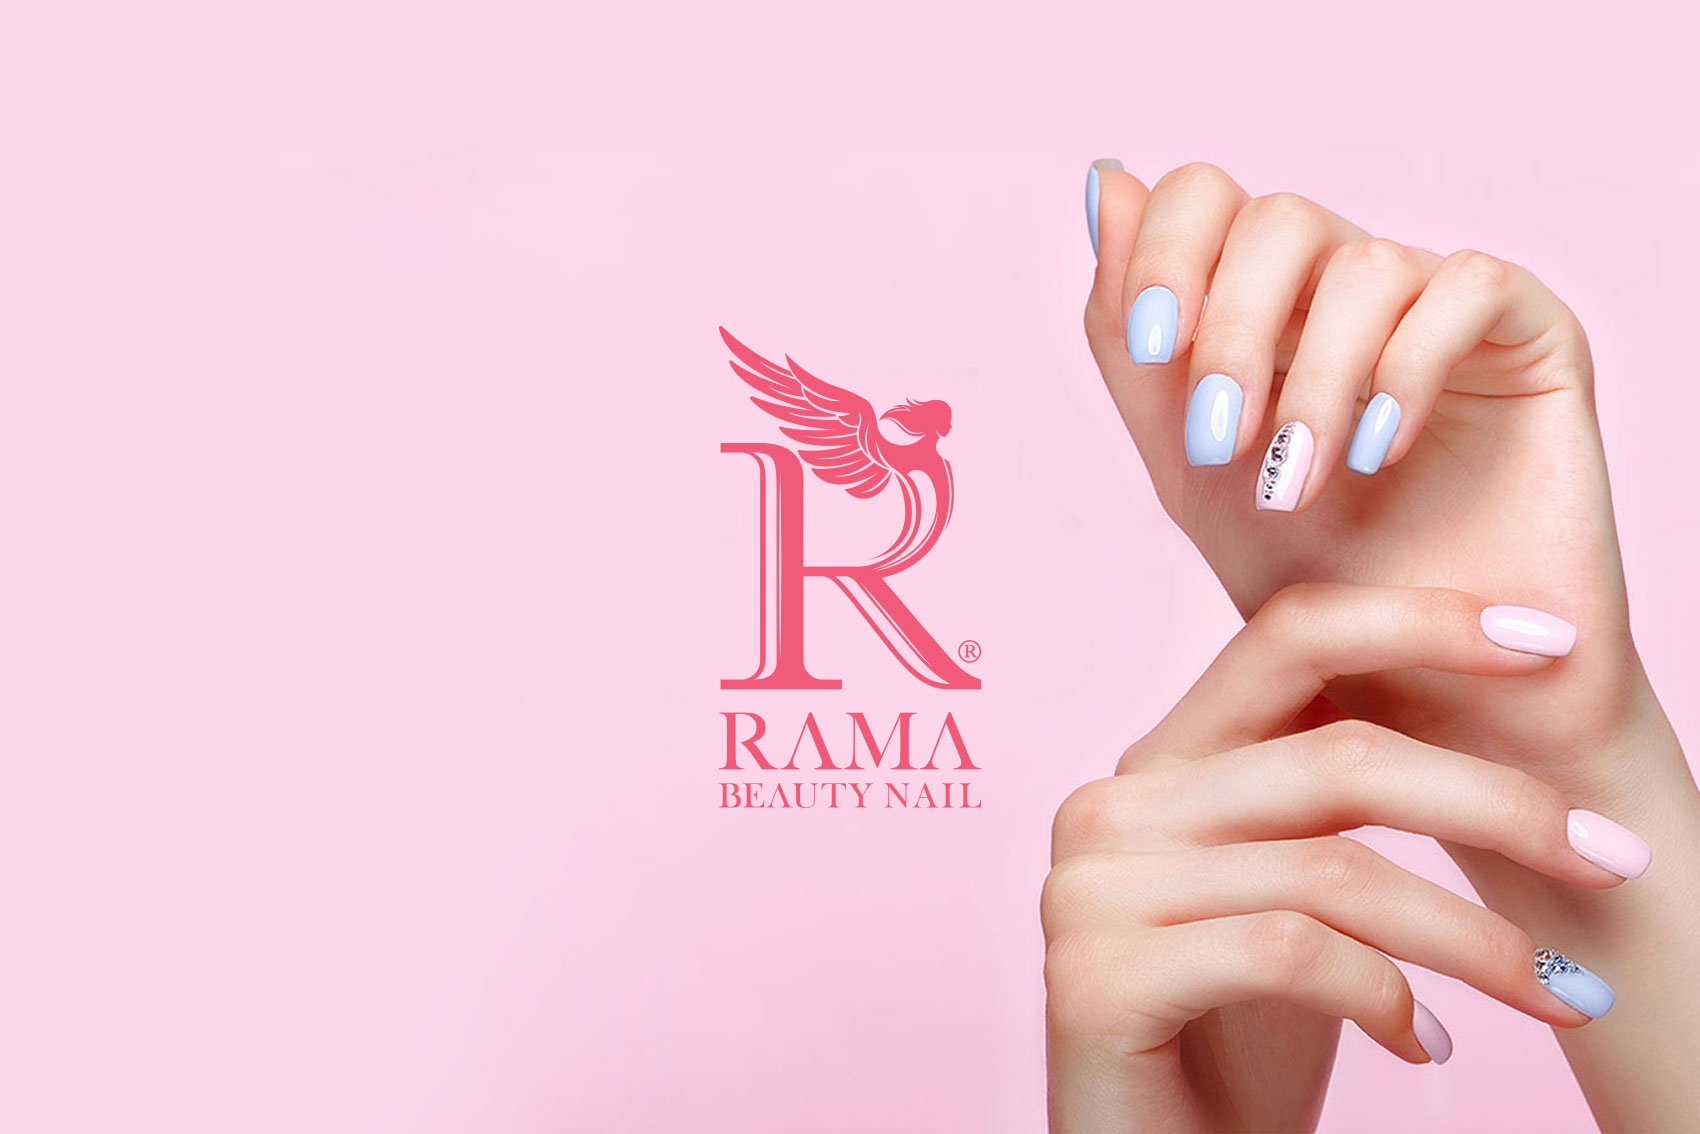 Rama Beauty Nail